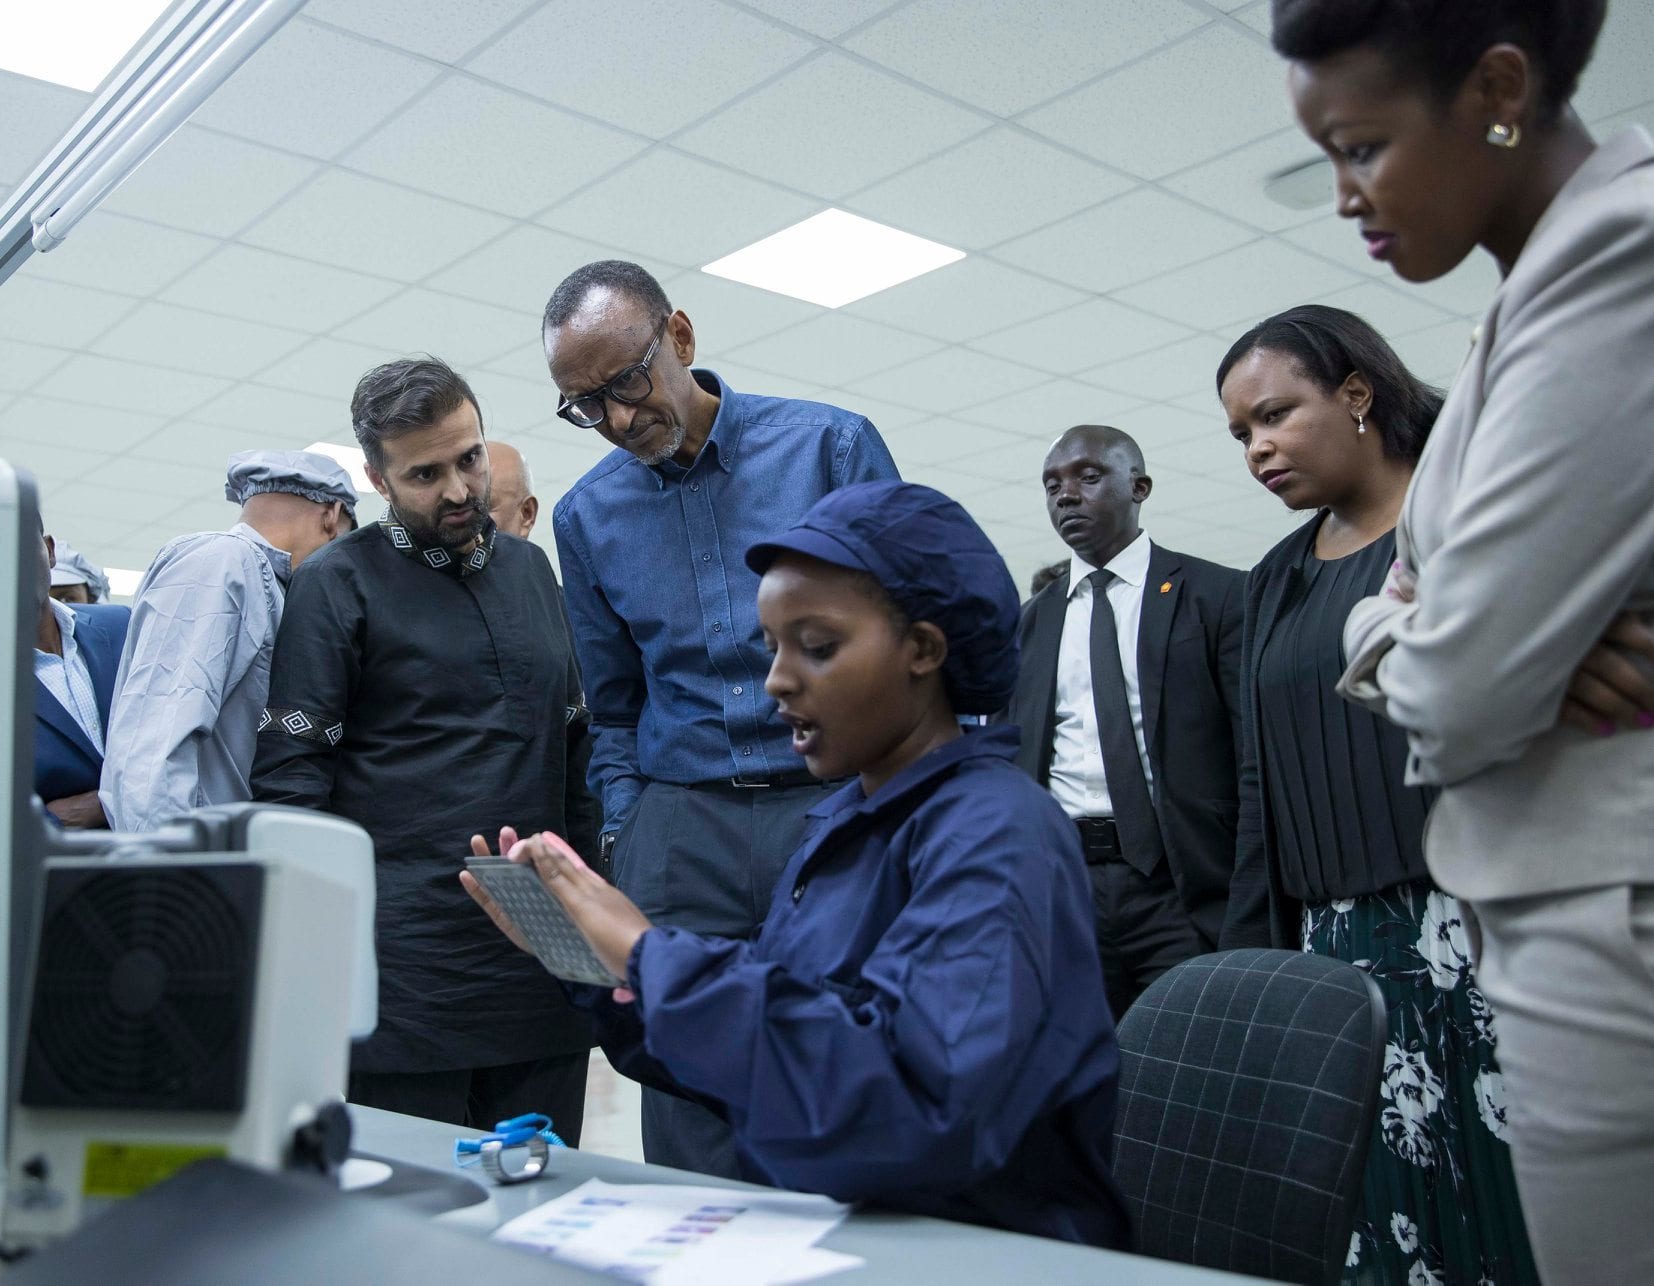 71519777 10156162118312282 9138399862704832512 o 1 - Rwanda : lancement officiel de l’usine de fabrication de smartphone